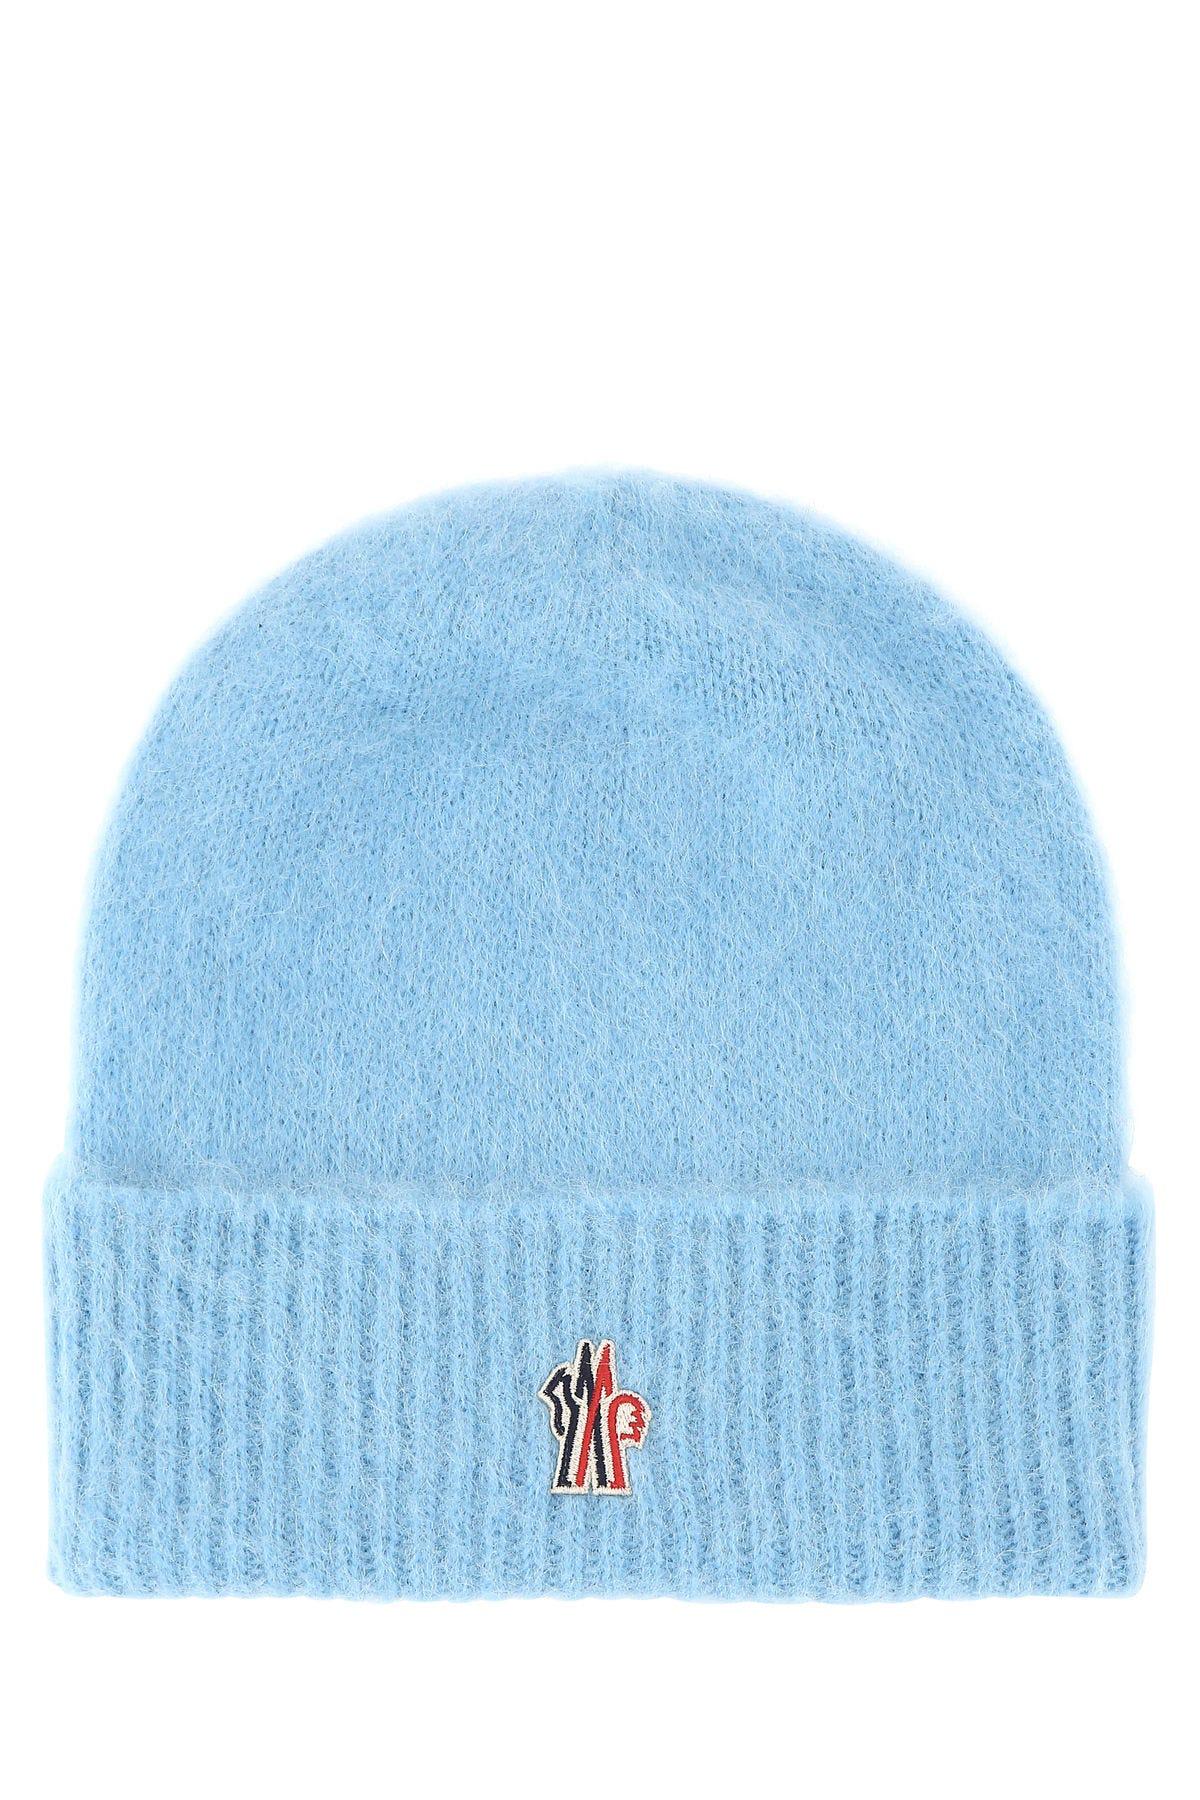 Moncler Grenoble Light-blue Alpaca Blend Beanie Hat